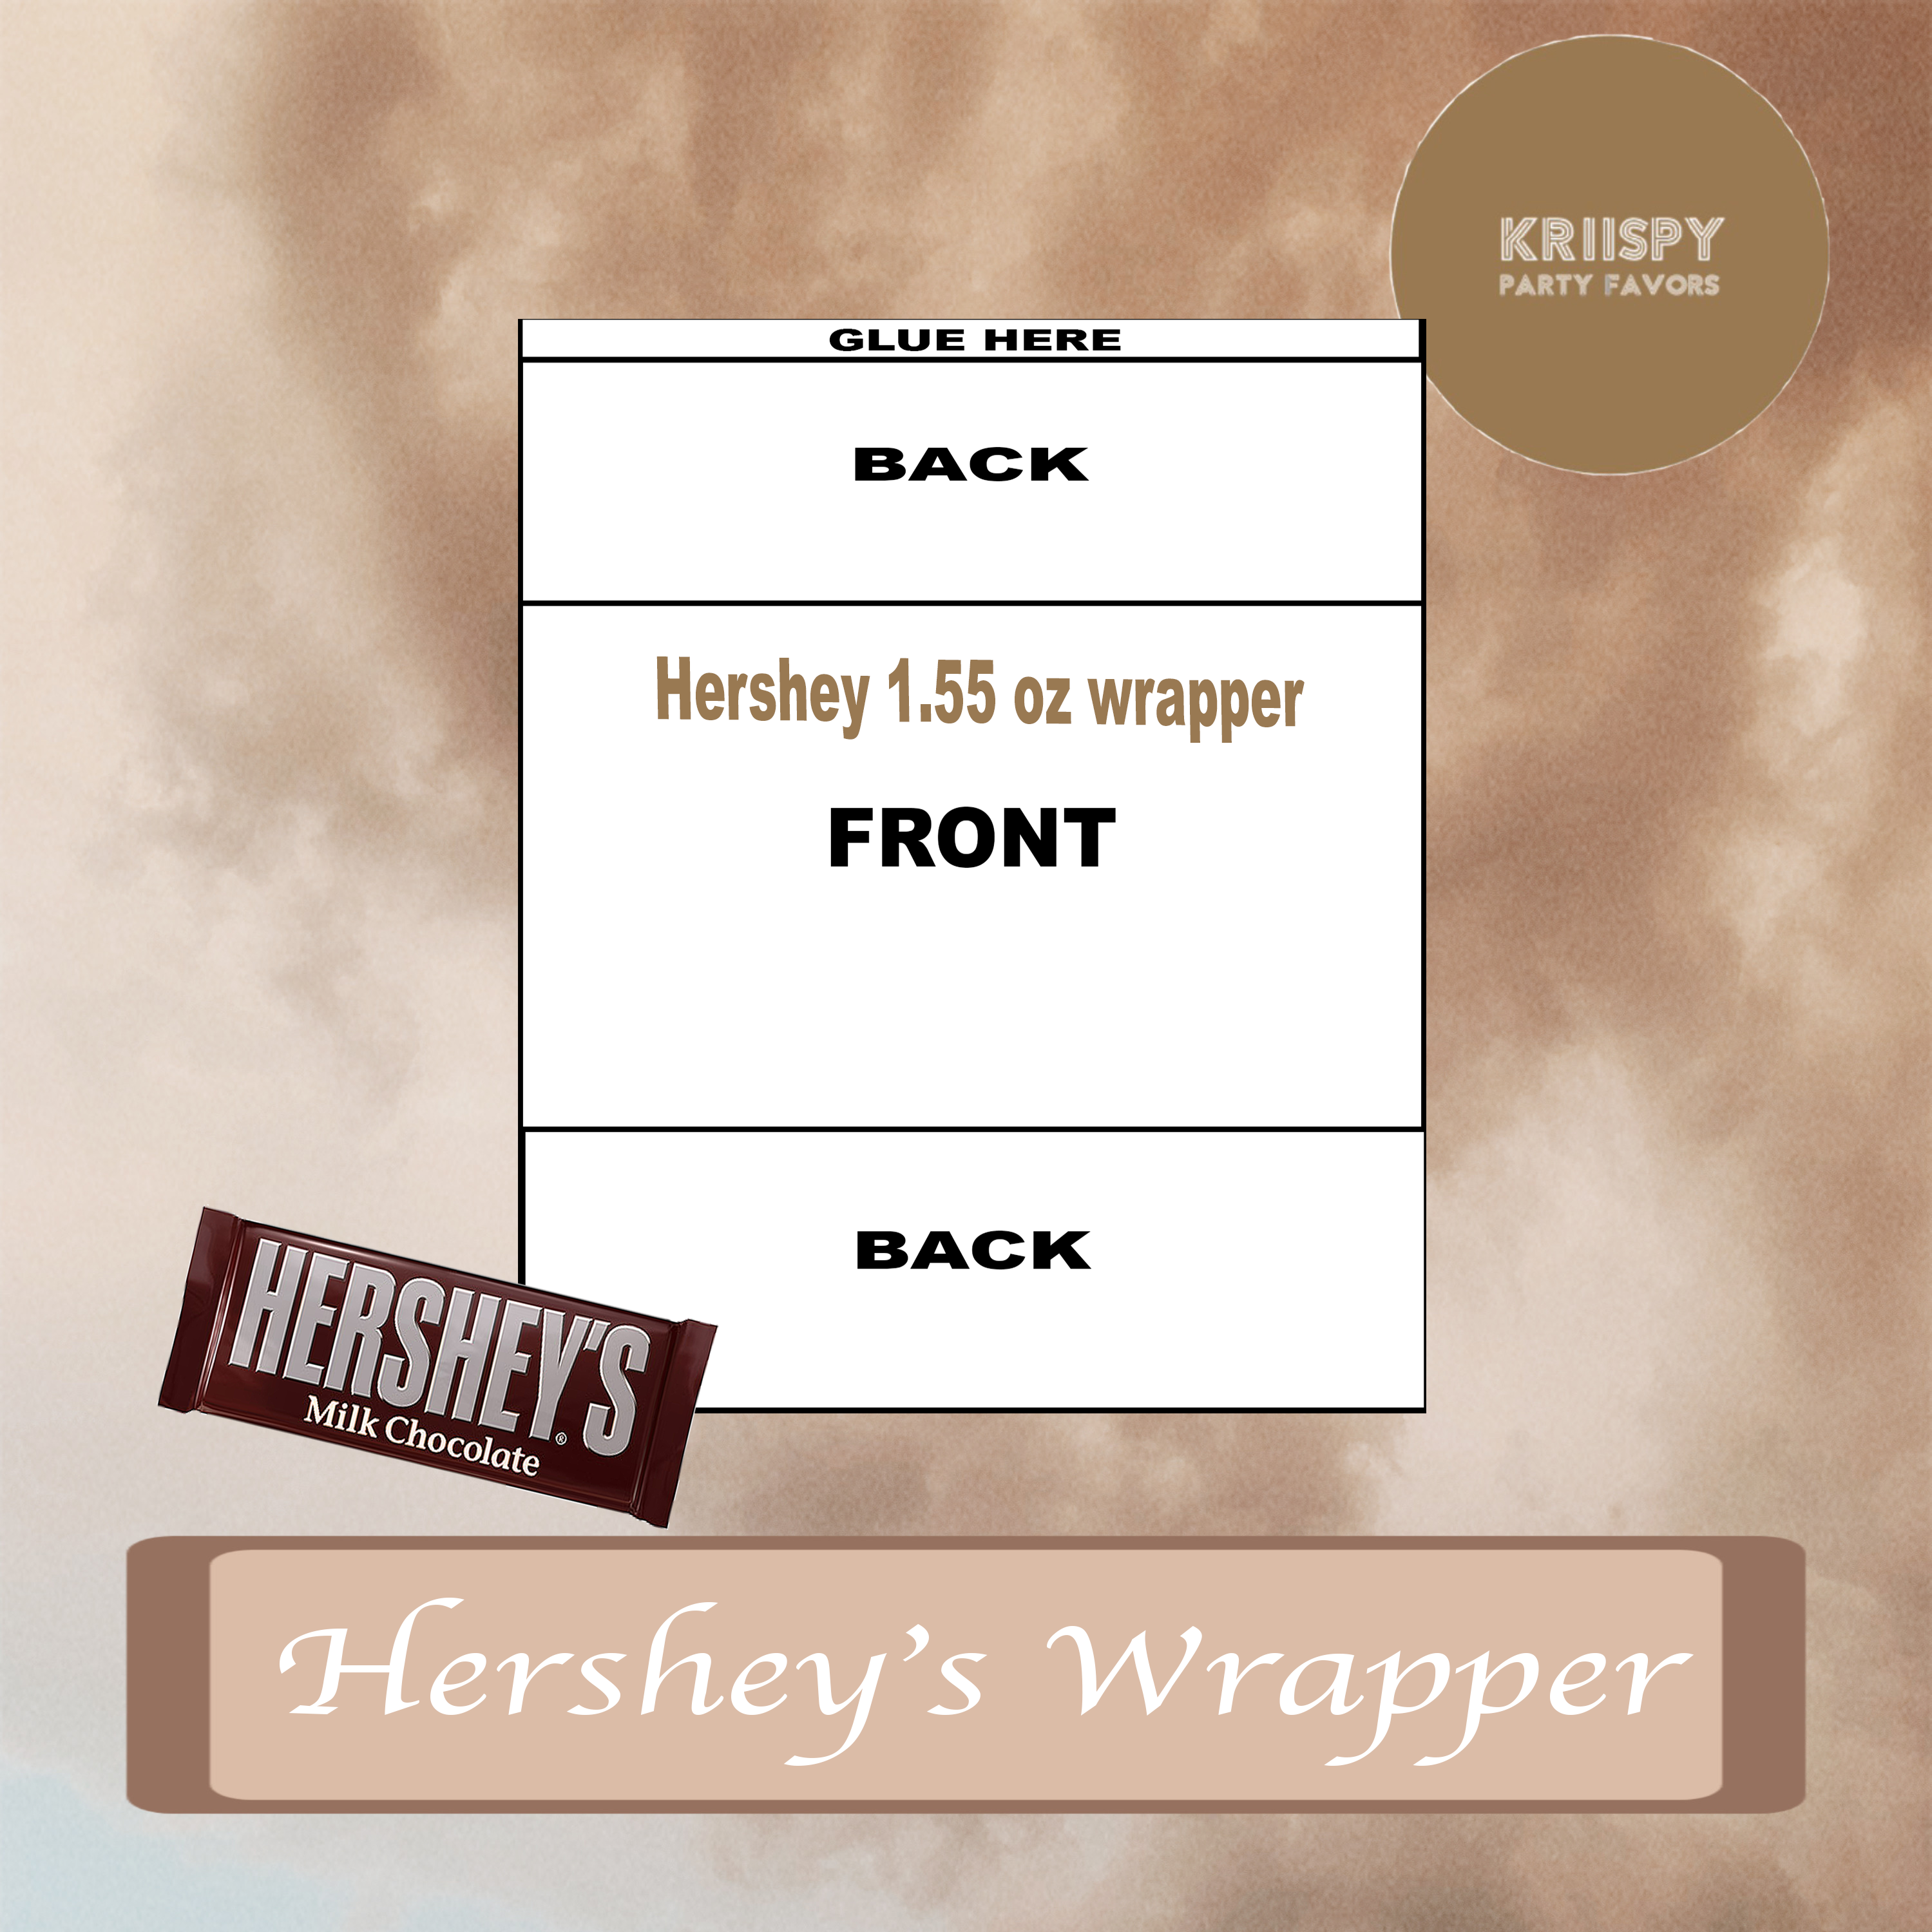 hershey chocolate bar template